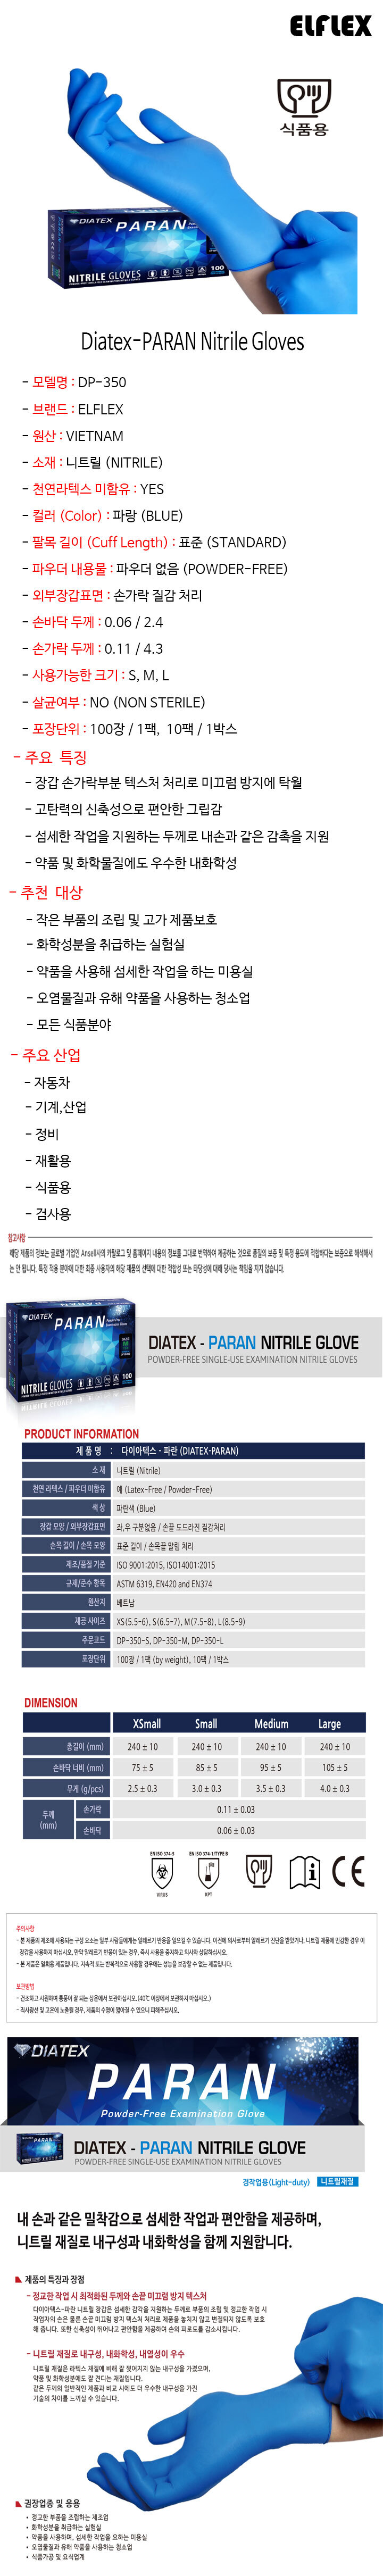 Diatex-PARAN-Nitrile-Gloves.jpg